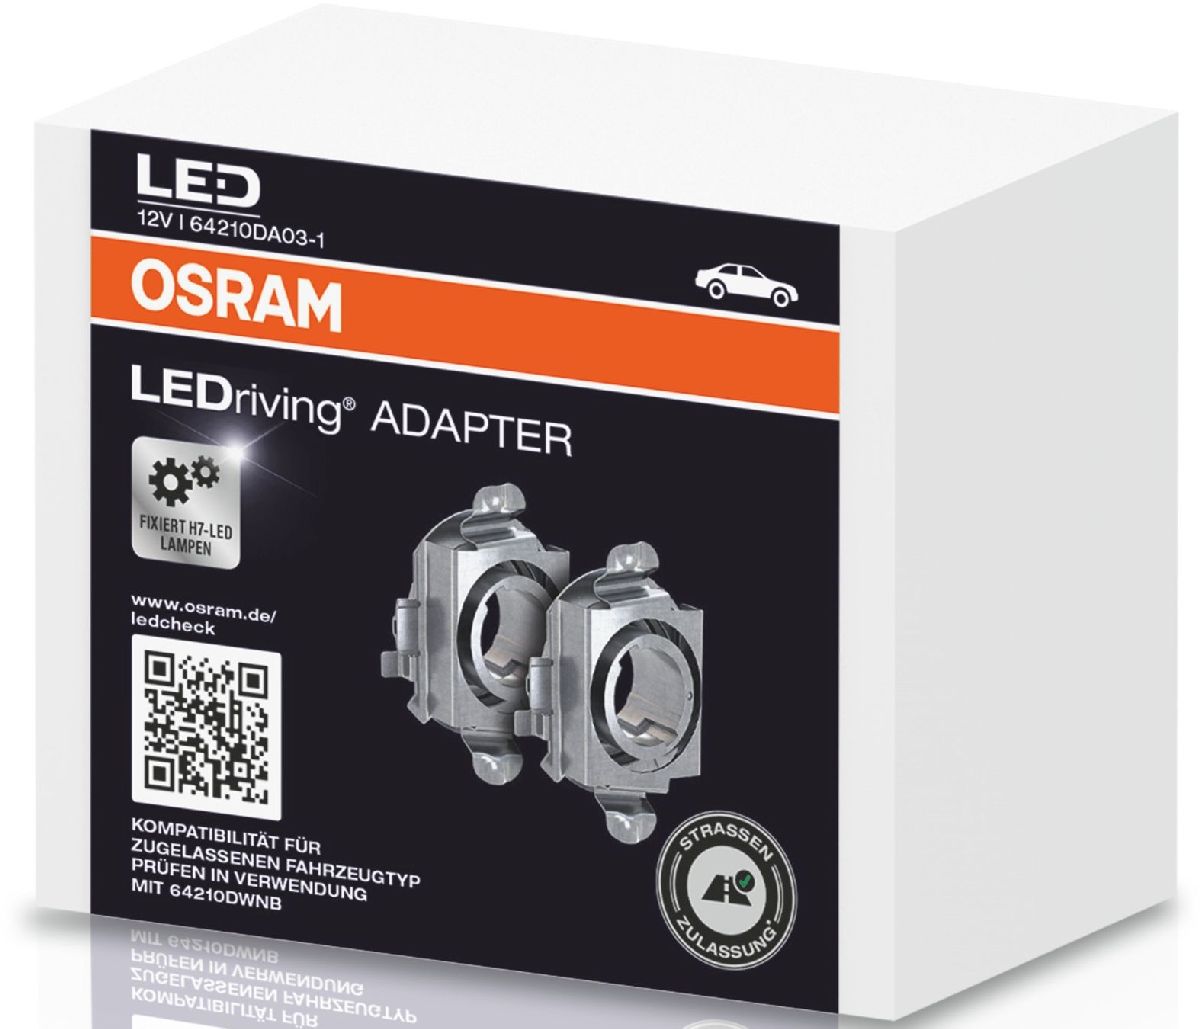 LEDriving Adapter 3-1